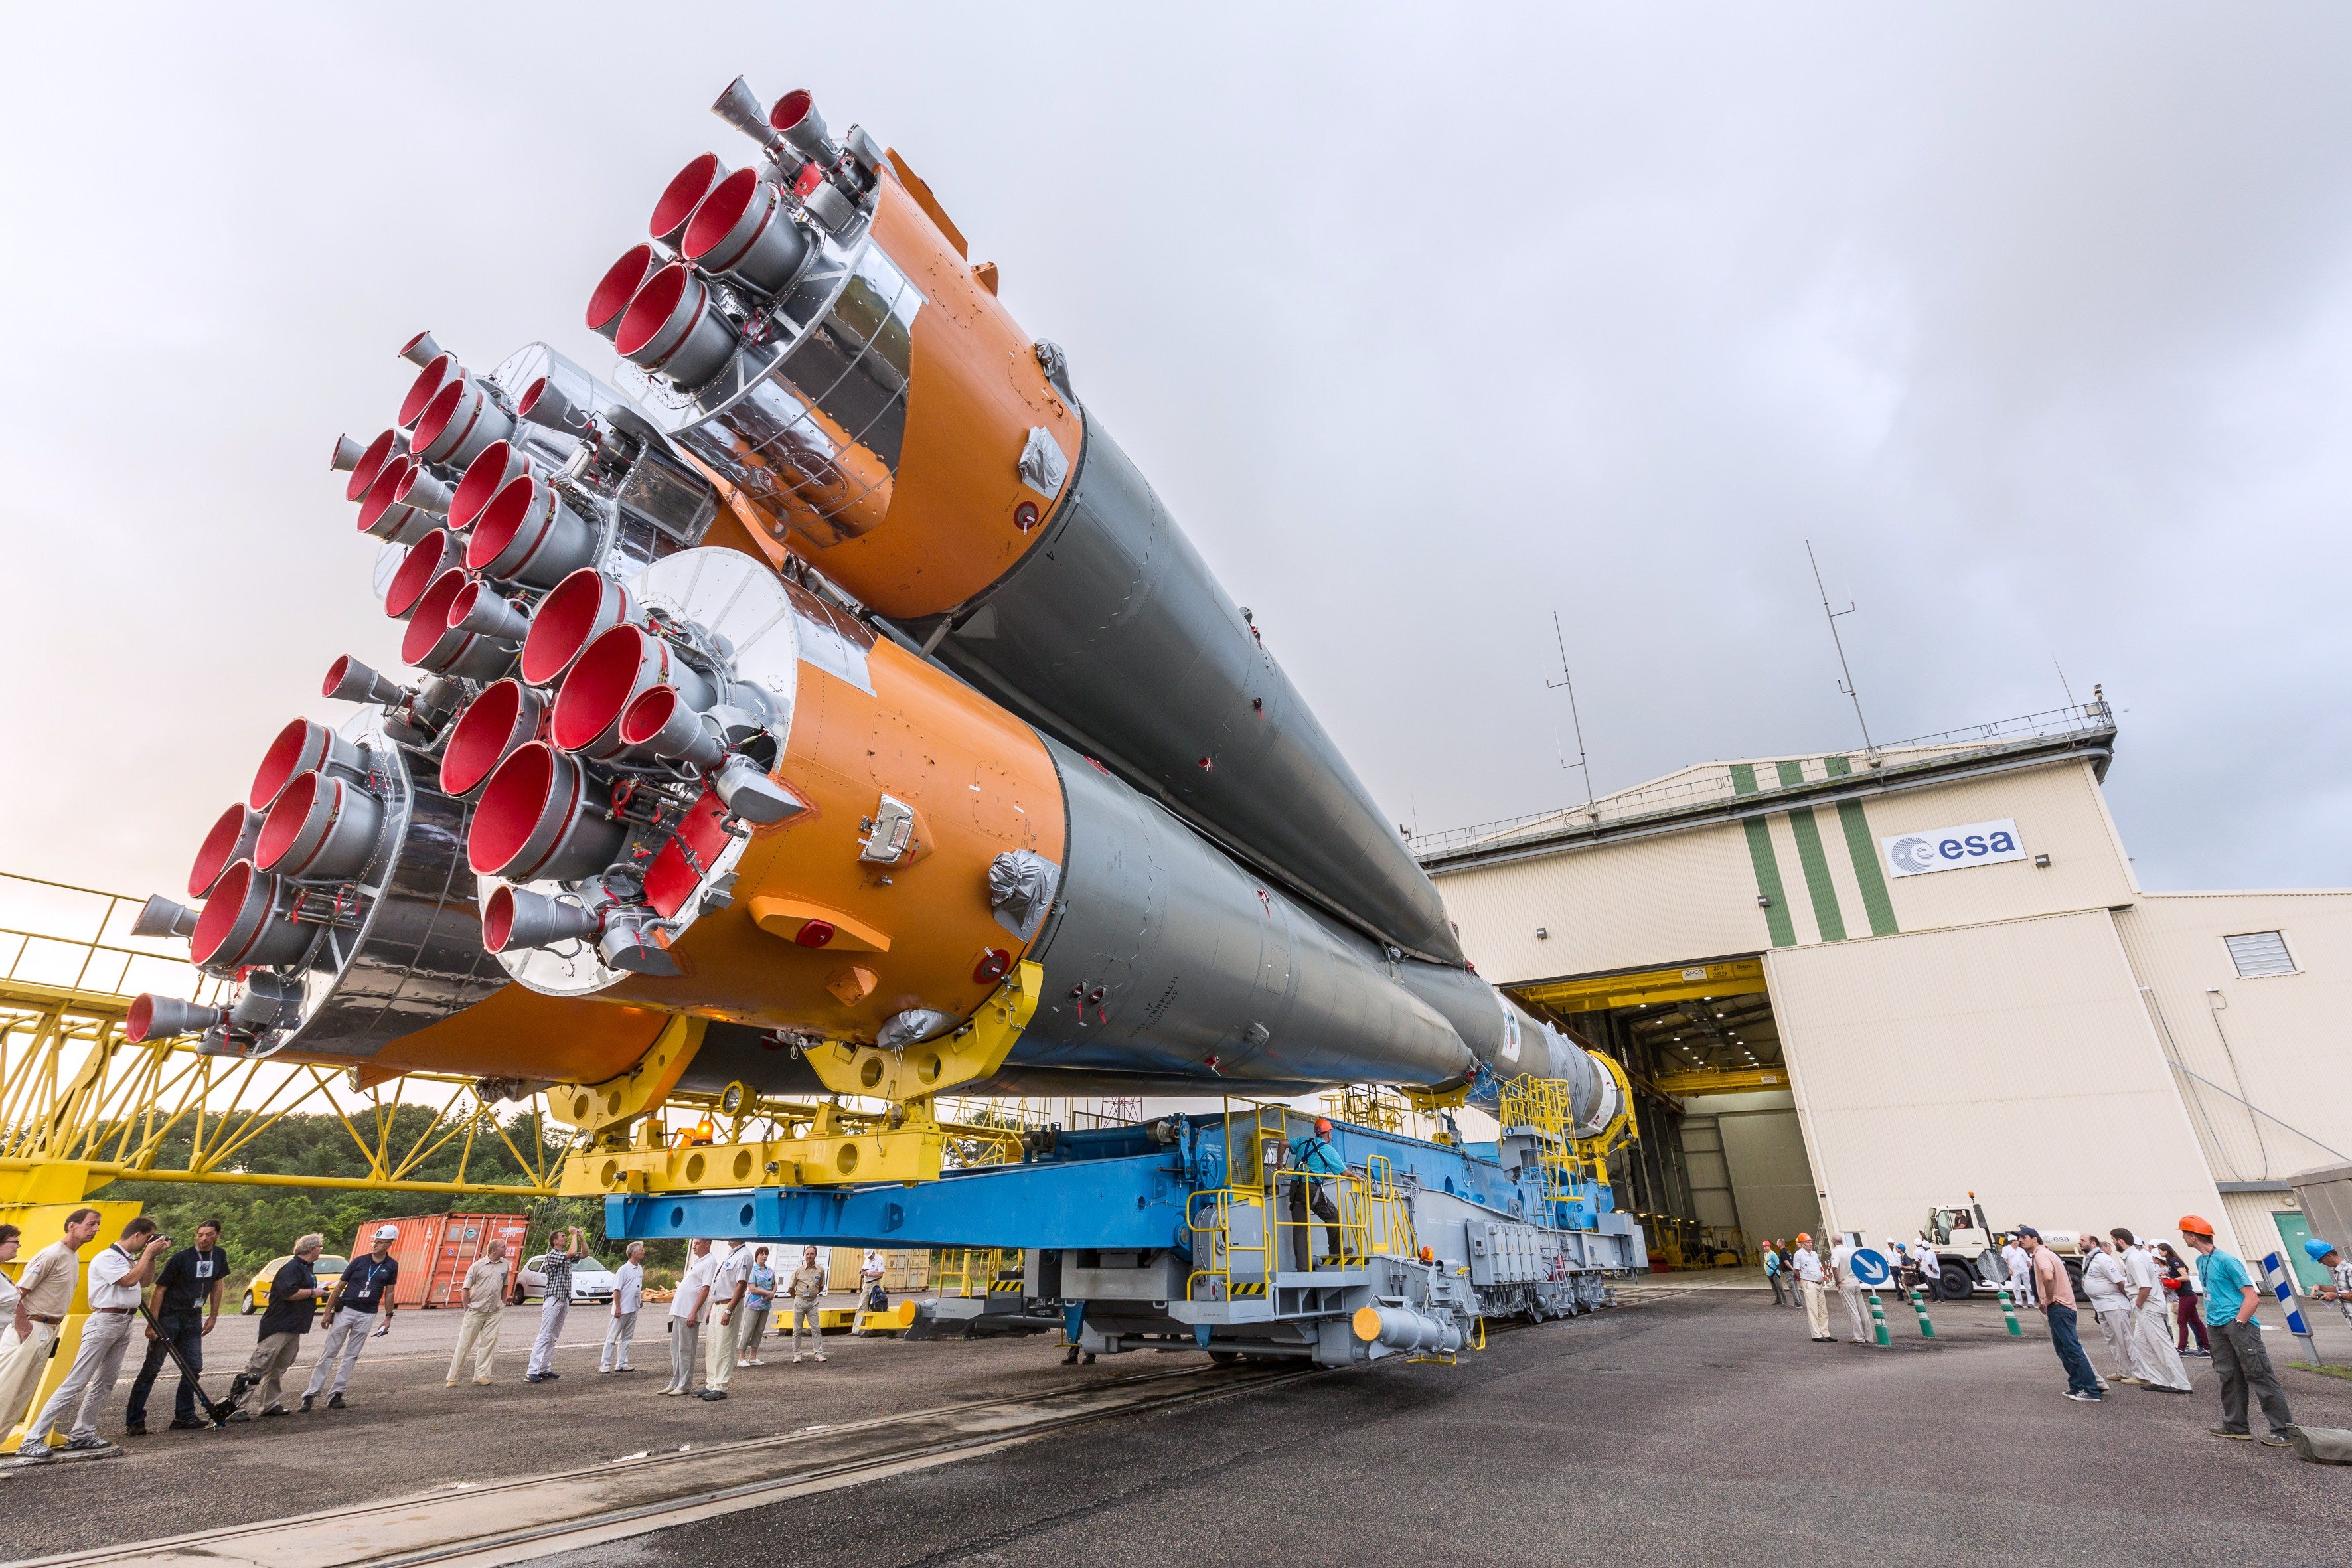 A Russian Soyuz rocket at the European spaceport in Kourou, French Guiana